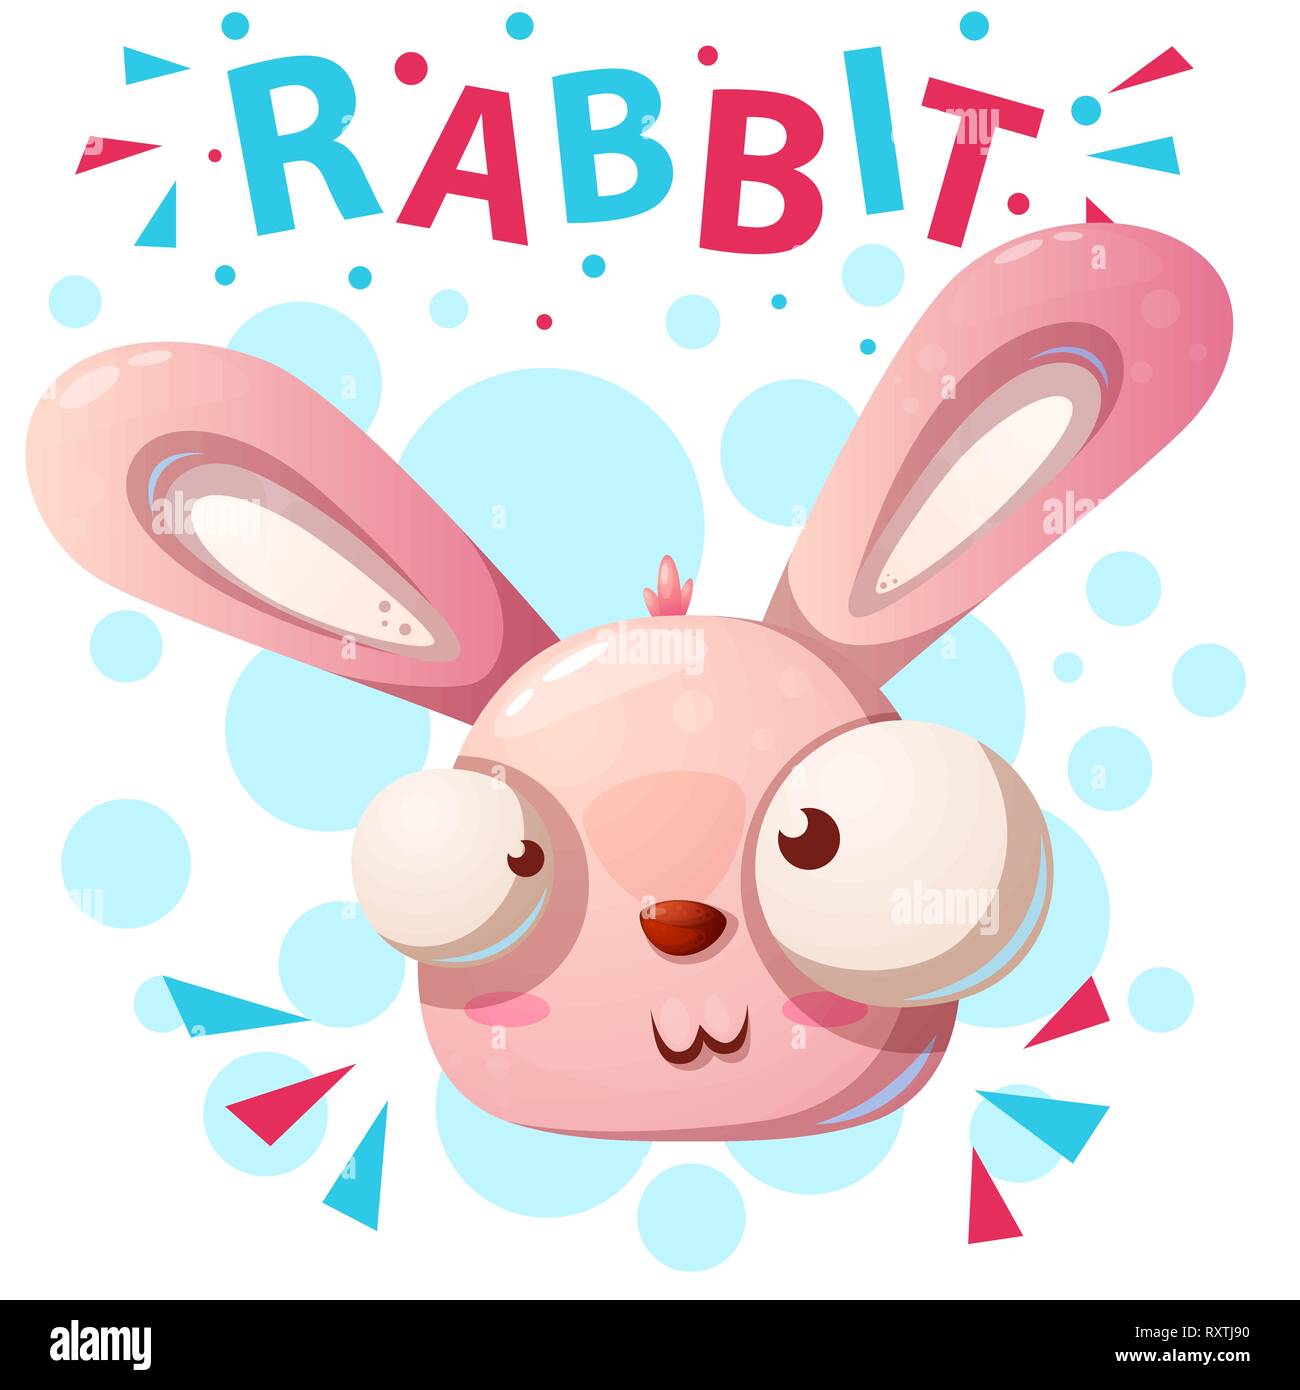 Cute rabbit characters - cartoon illustration. Stock Vector